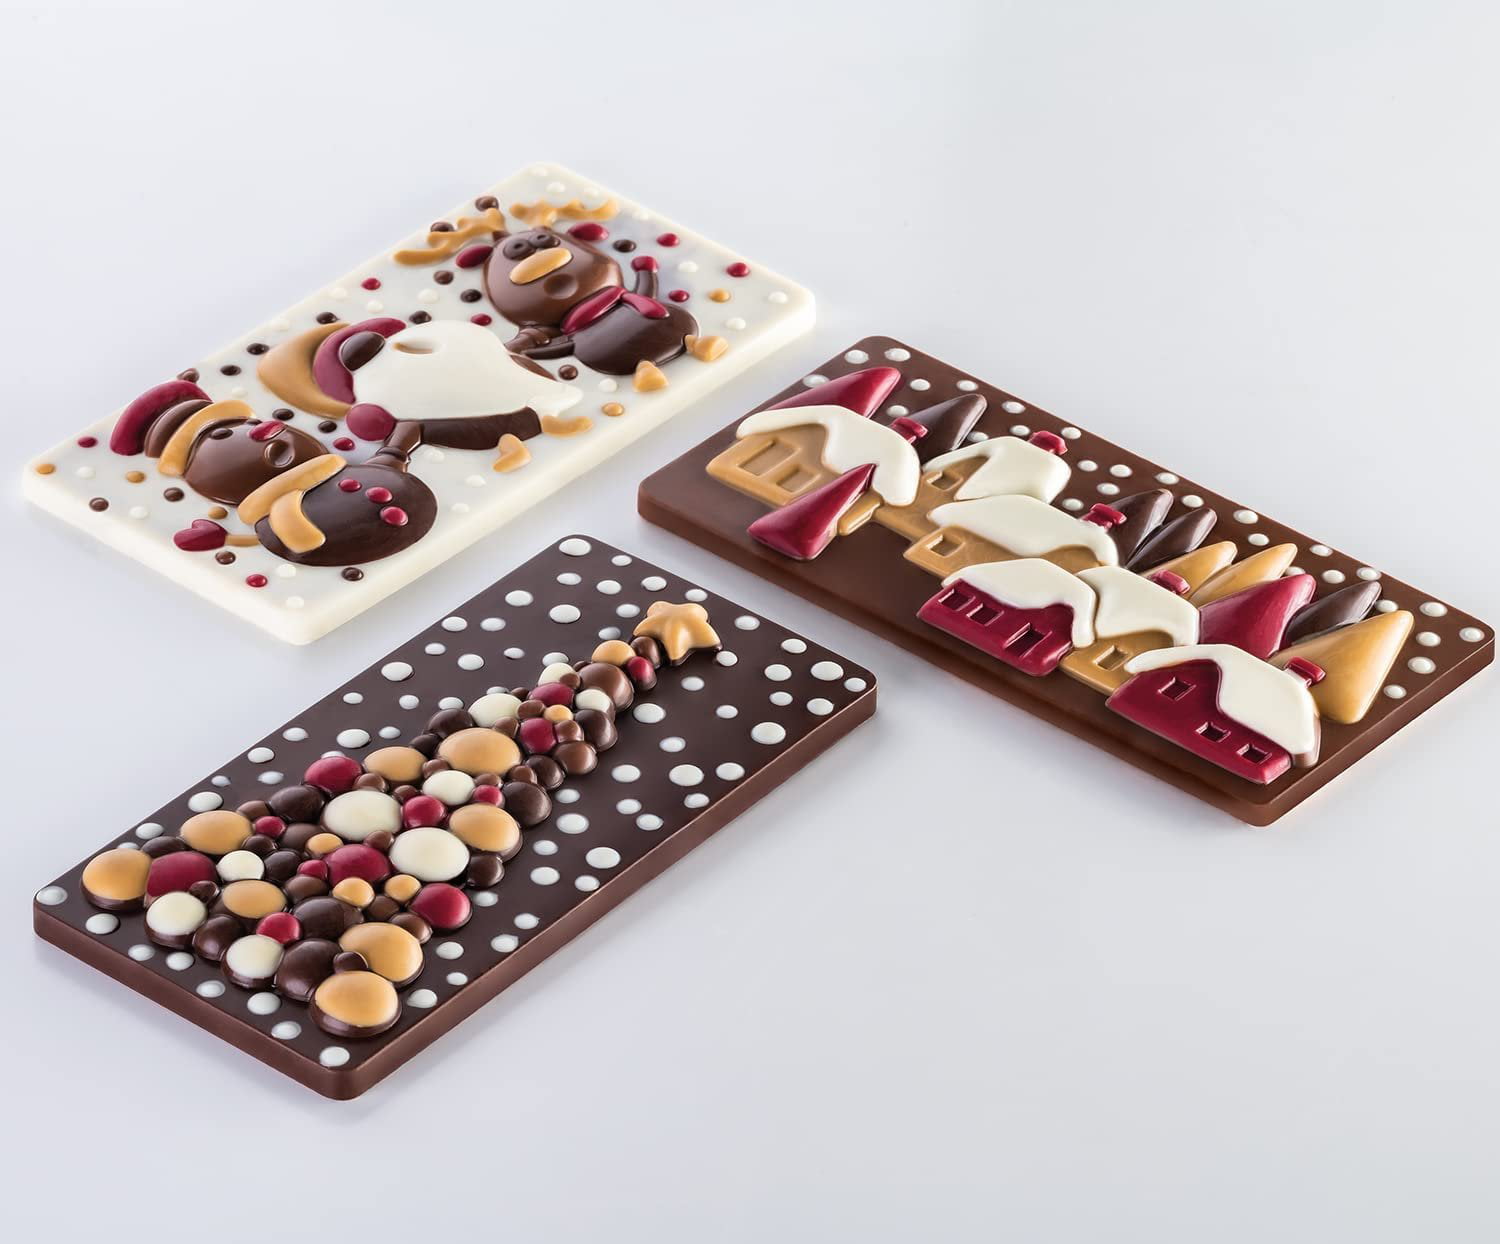 Mini Chocolate Bars #7 Chocolate Mould - Home Style Chocolates